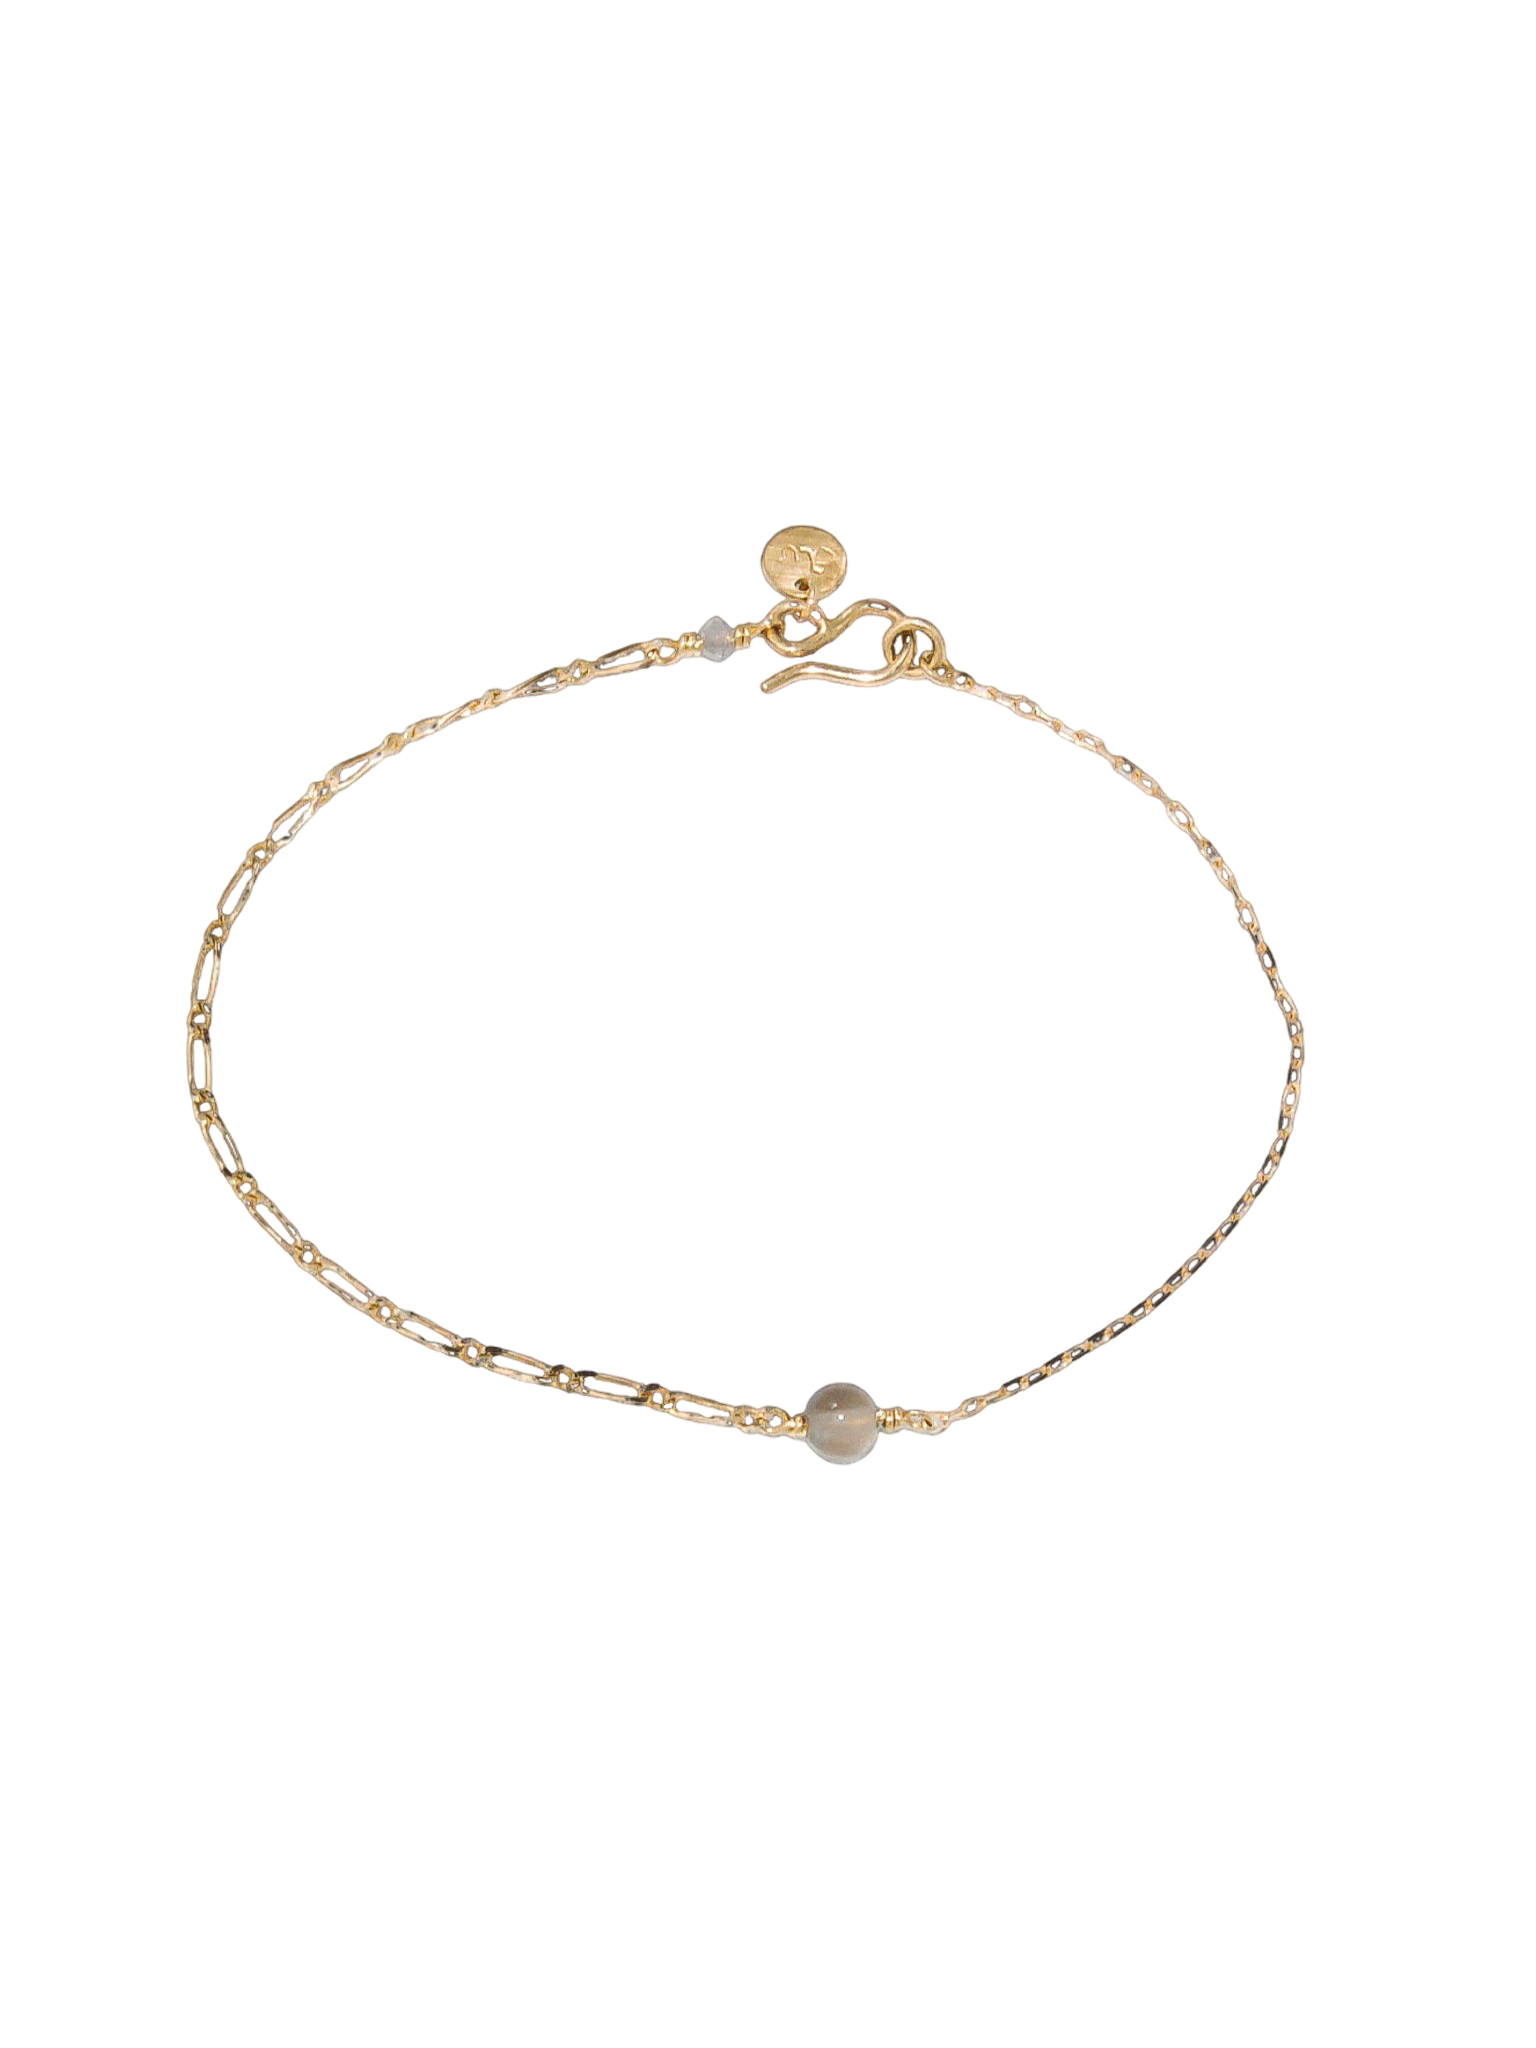 Bracelet with moonstone and diamond